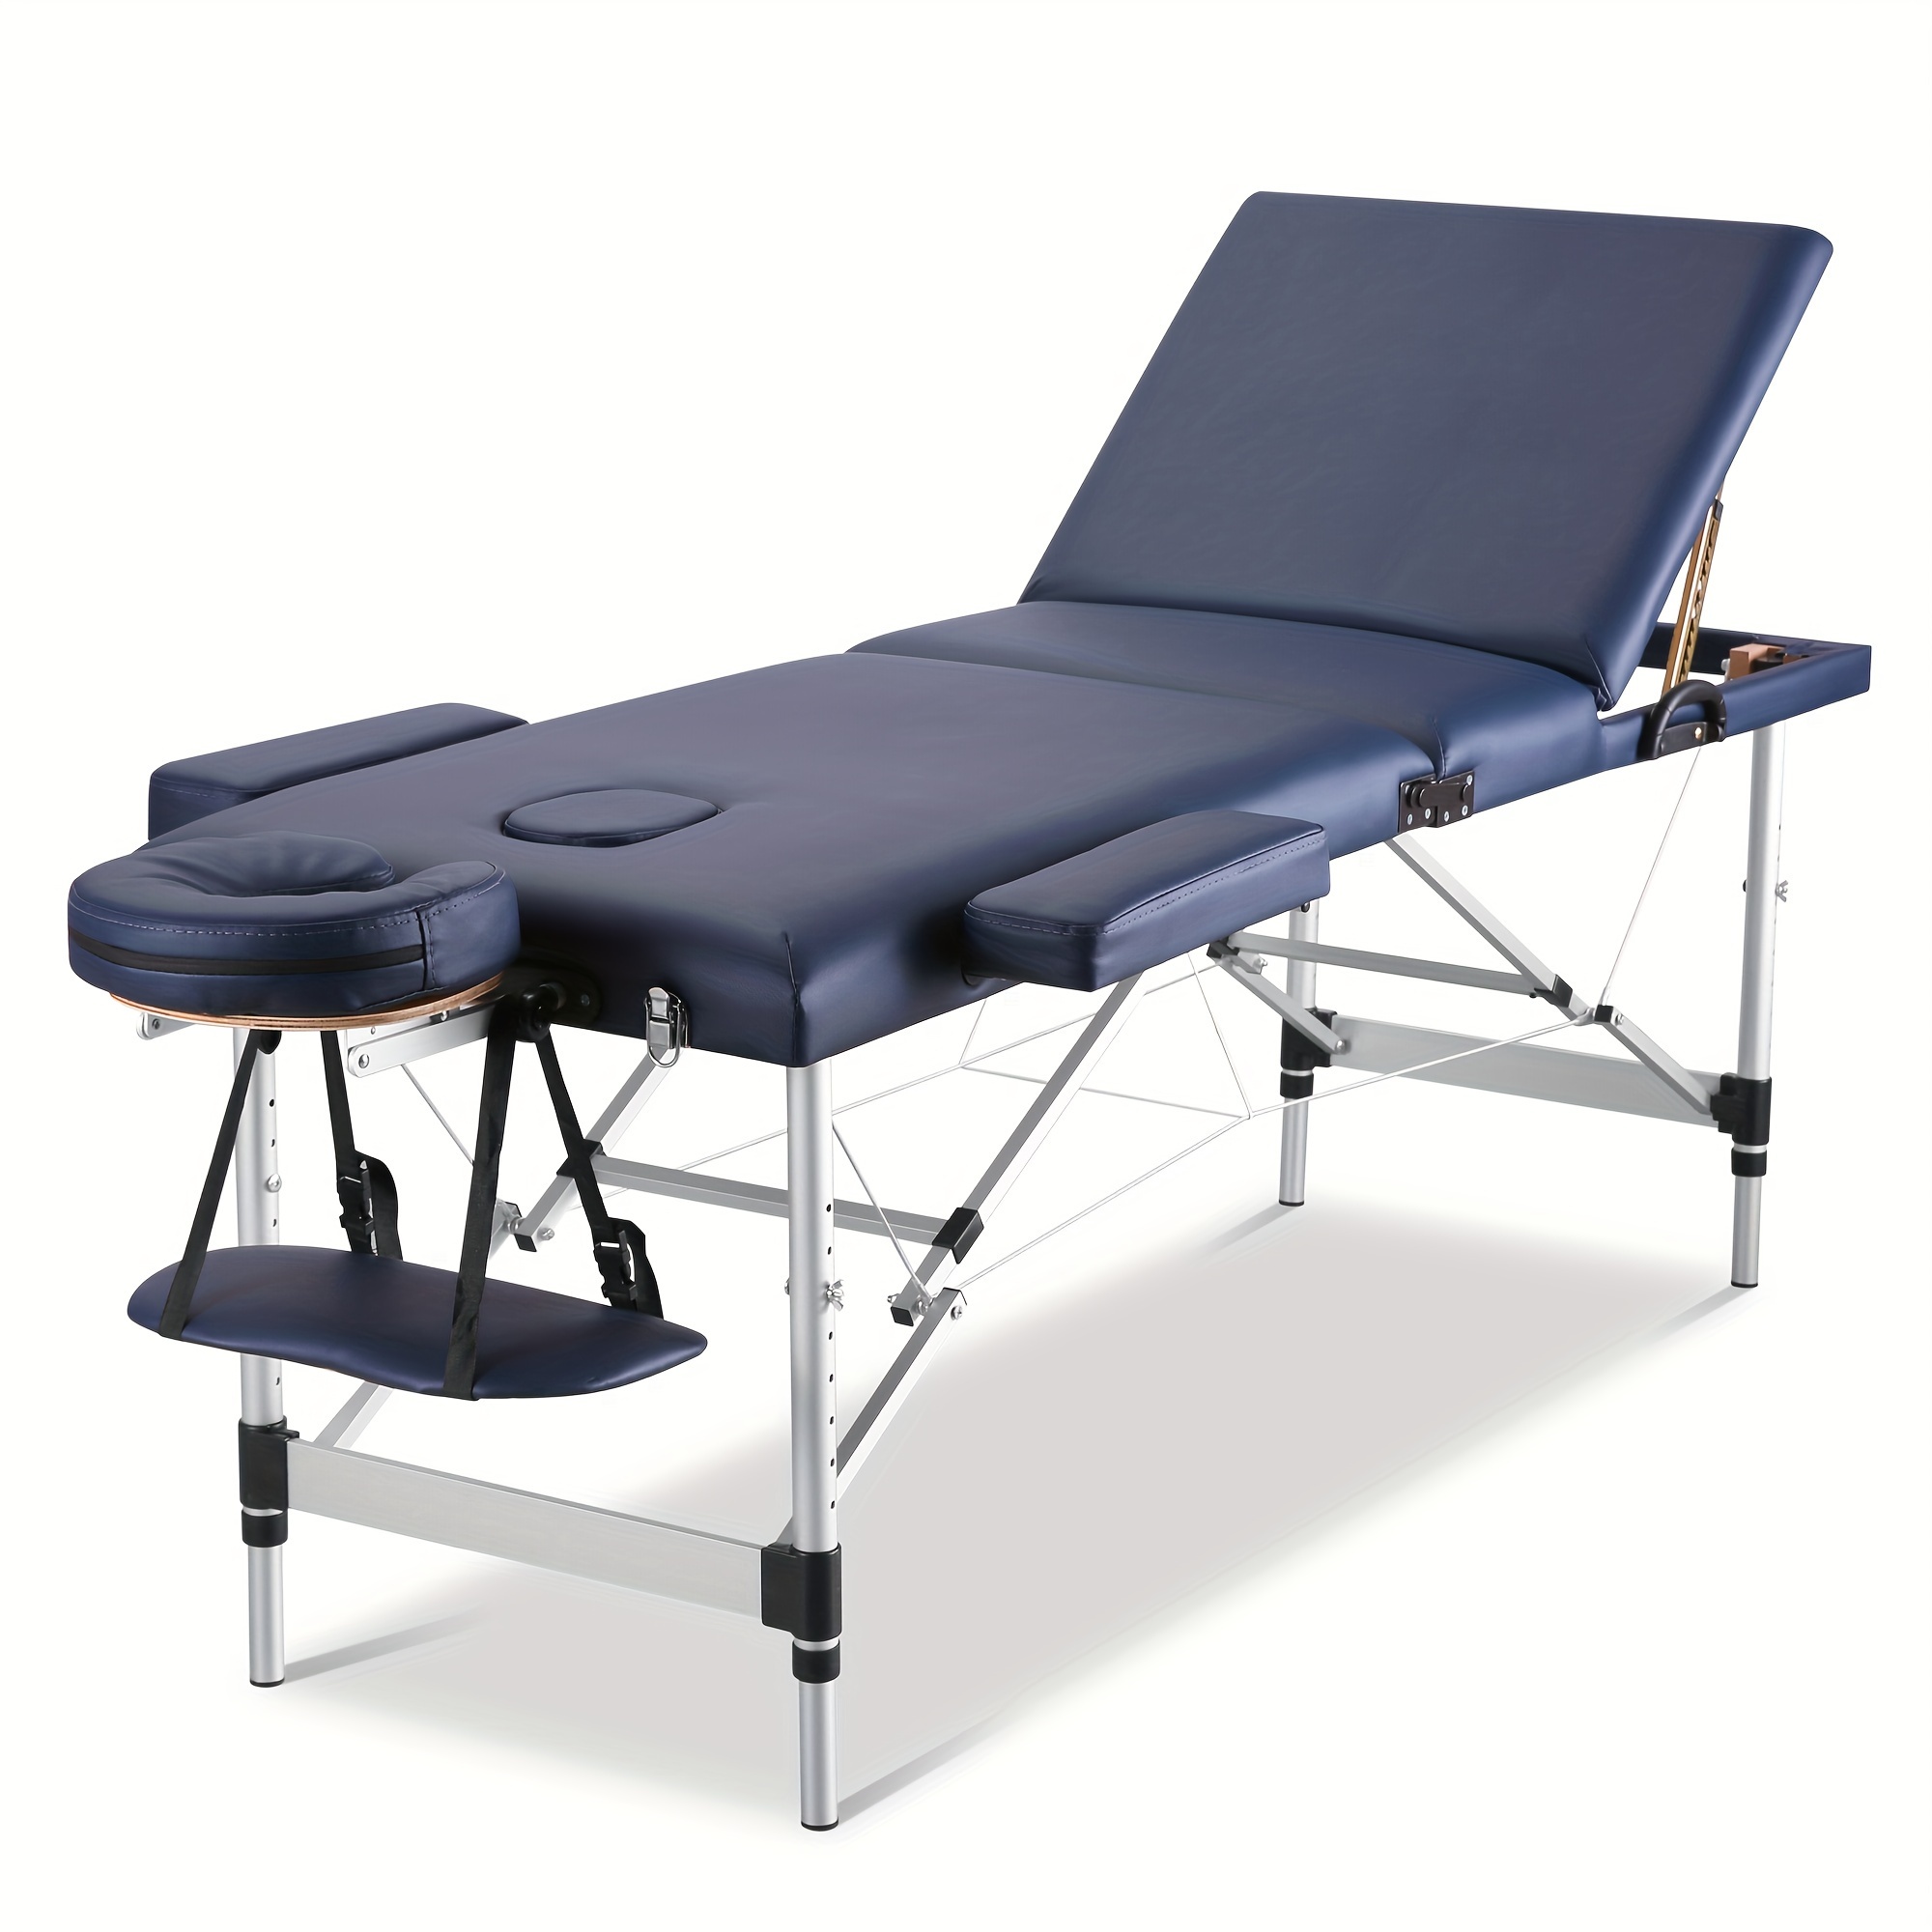 

Massage Table Portable 3-fold Aluminum Massage Bed Lash Spa Tattoo Bed Esthetician Adjustable Professional Legs Carrying Bag 496 Lbs